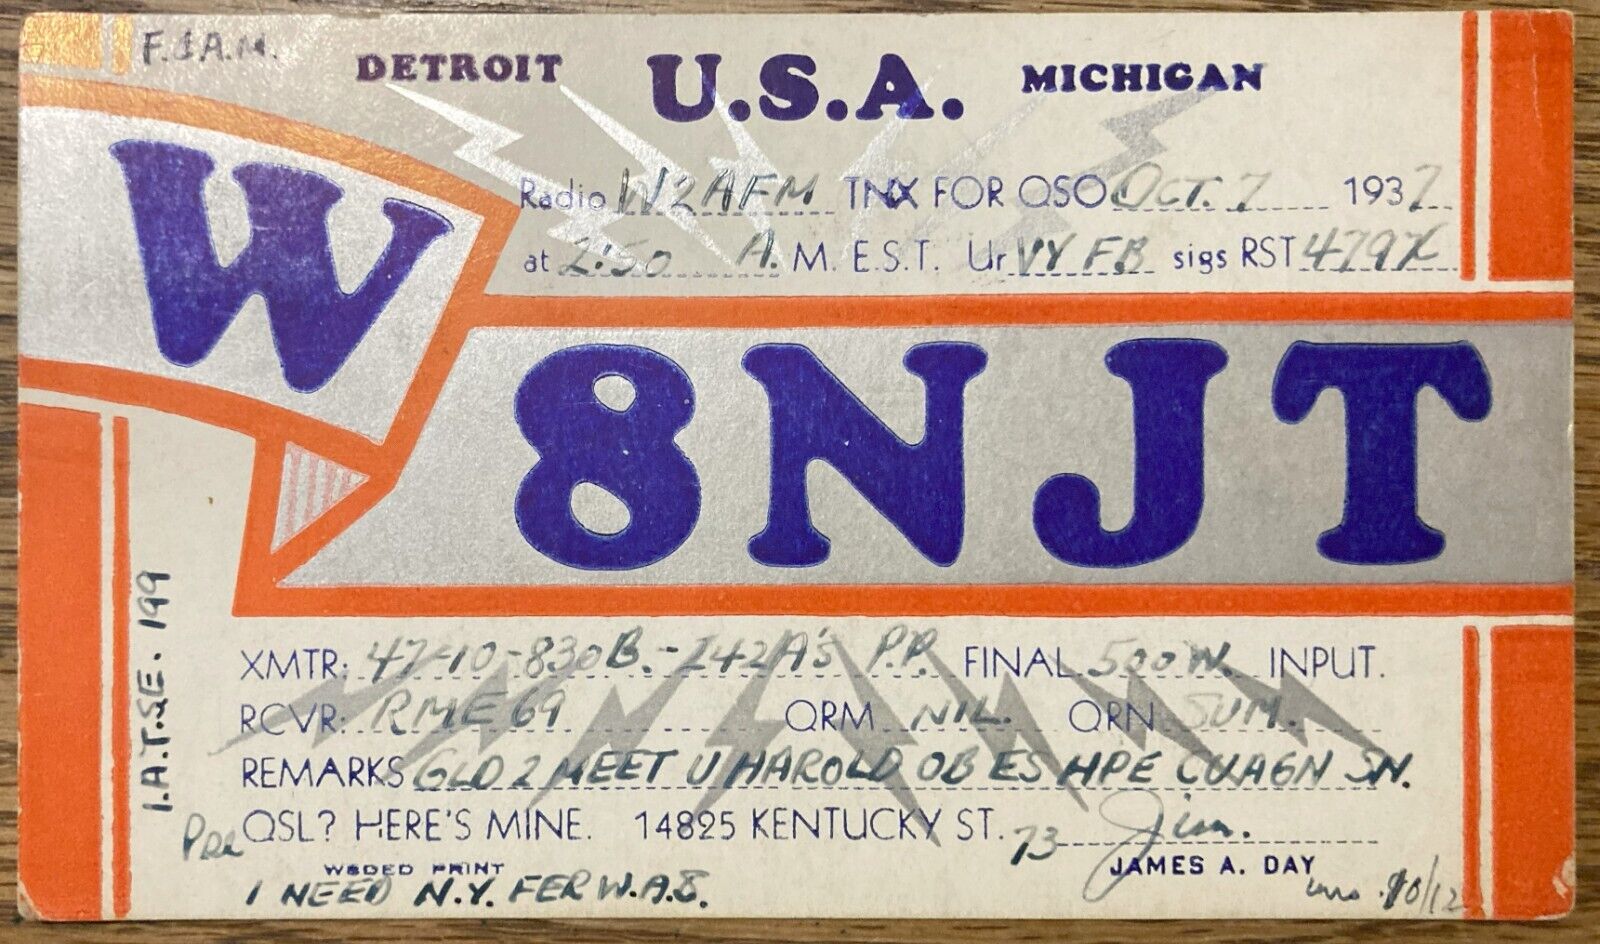 QSL Card - 1937 - Detroit, Michigan USA - W8NJT - James A. Day - Stamp